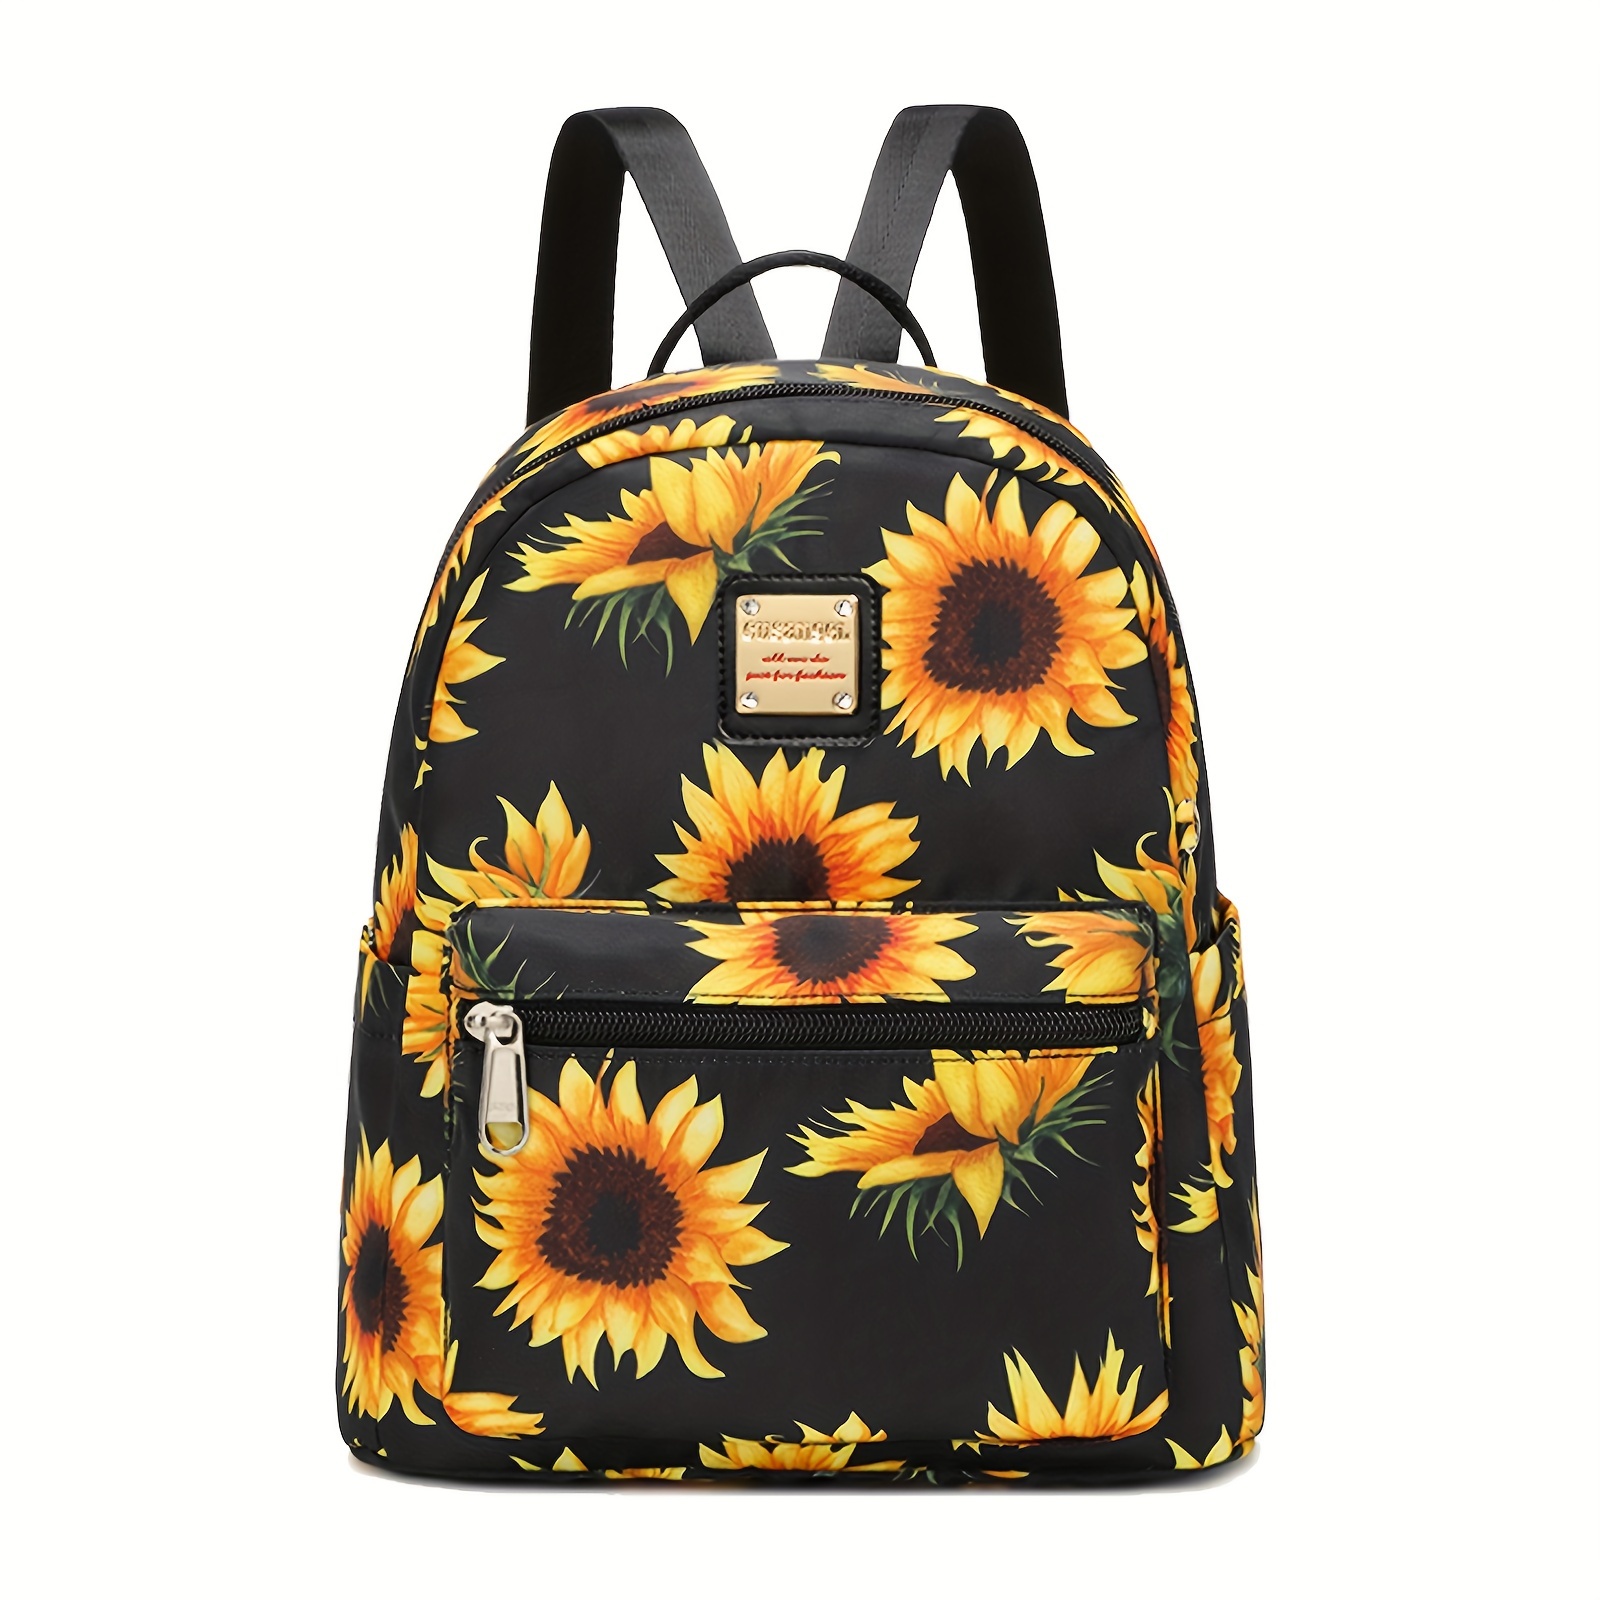 

Sunflower Print Backpack, Fashion Mini Daypack, Women's Lightweight Schoolbag For Travel, Work, School